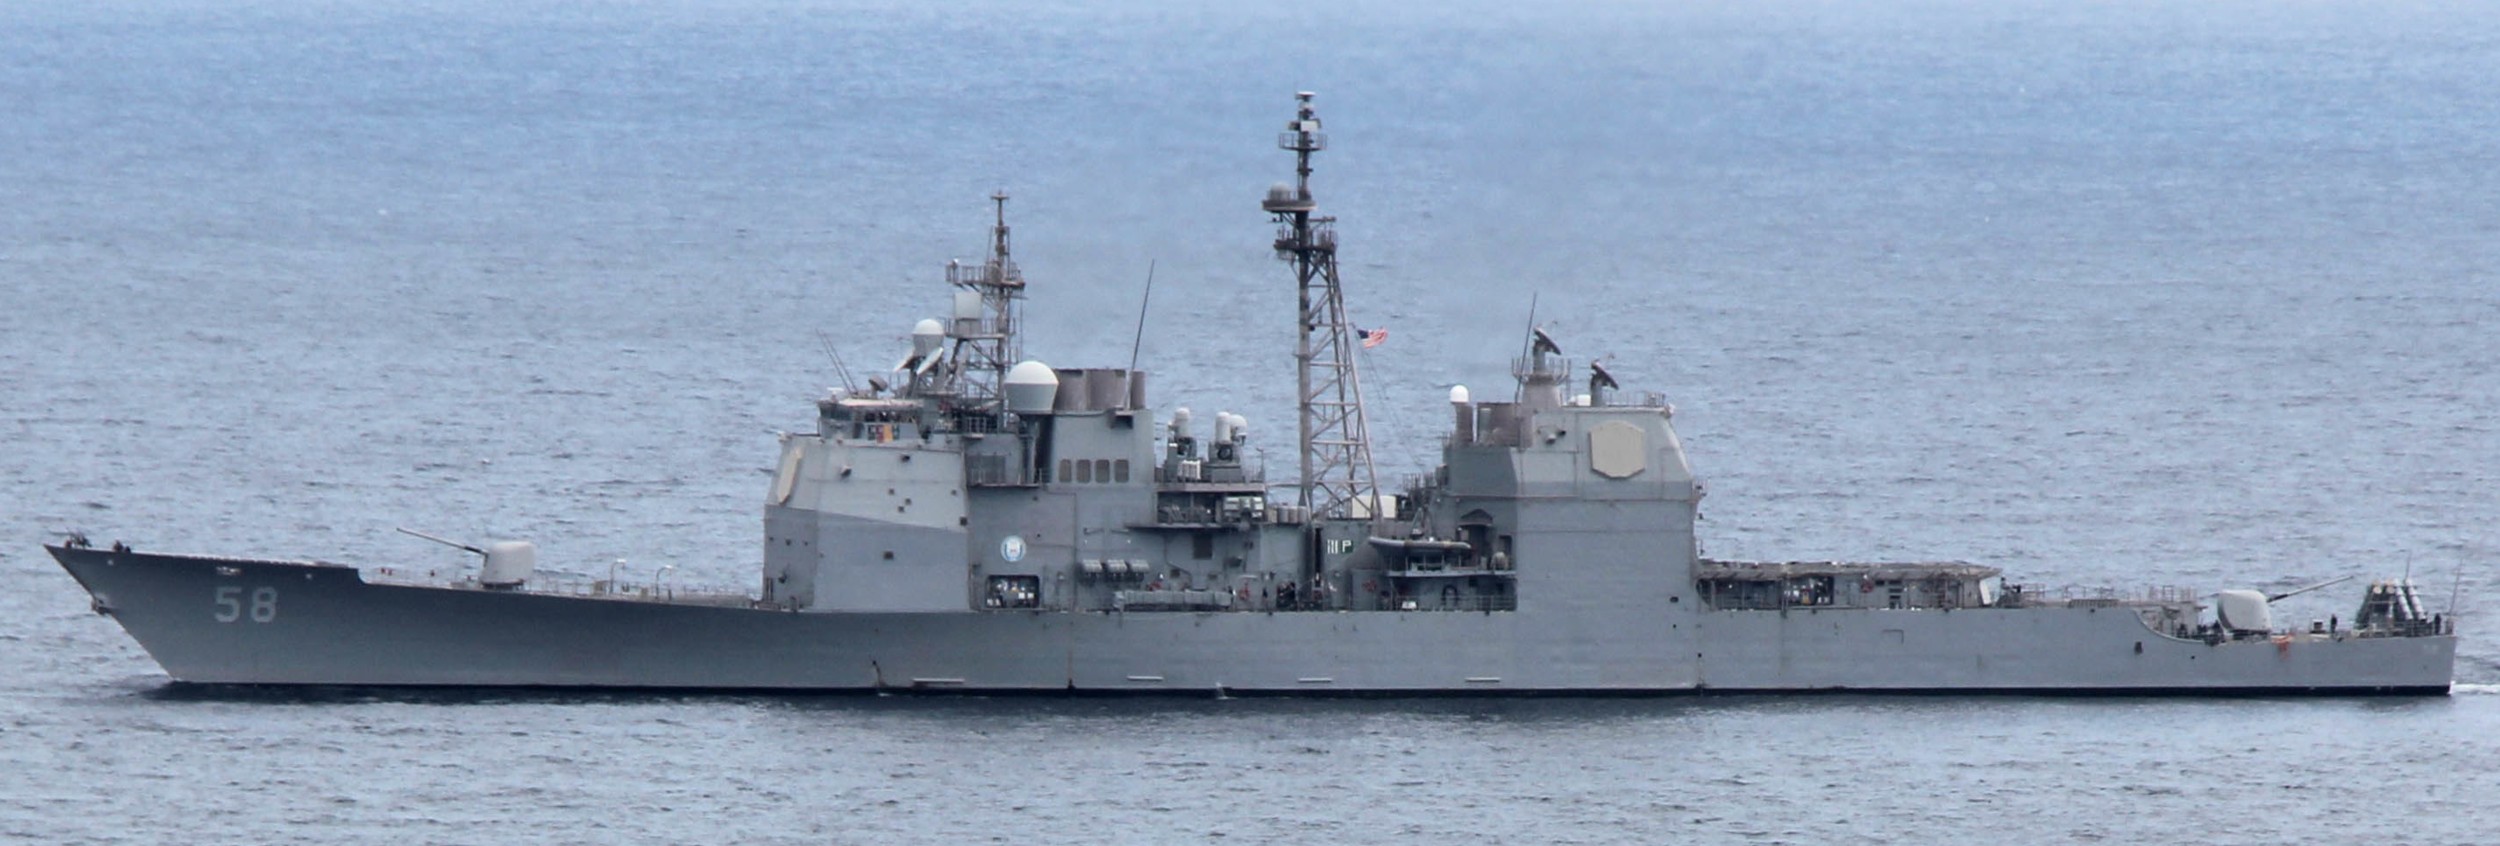 cg-58 uss philippine sea ticonderoga class guided missile cruiser aegis us navy arabian sea 66